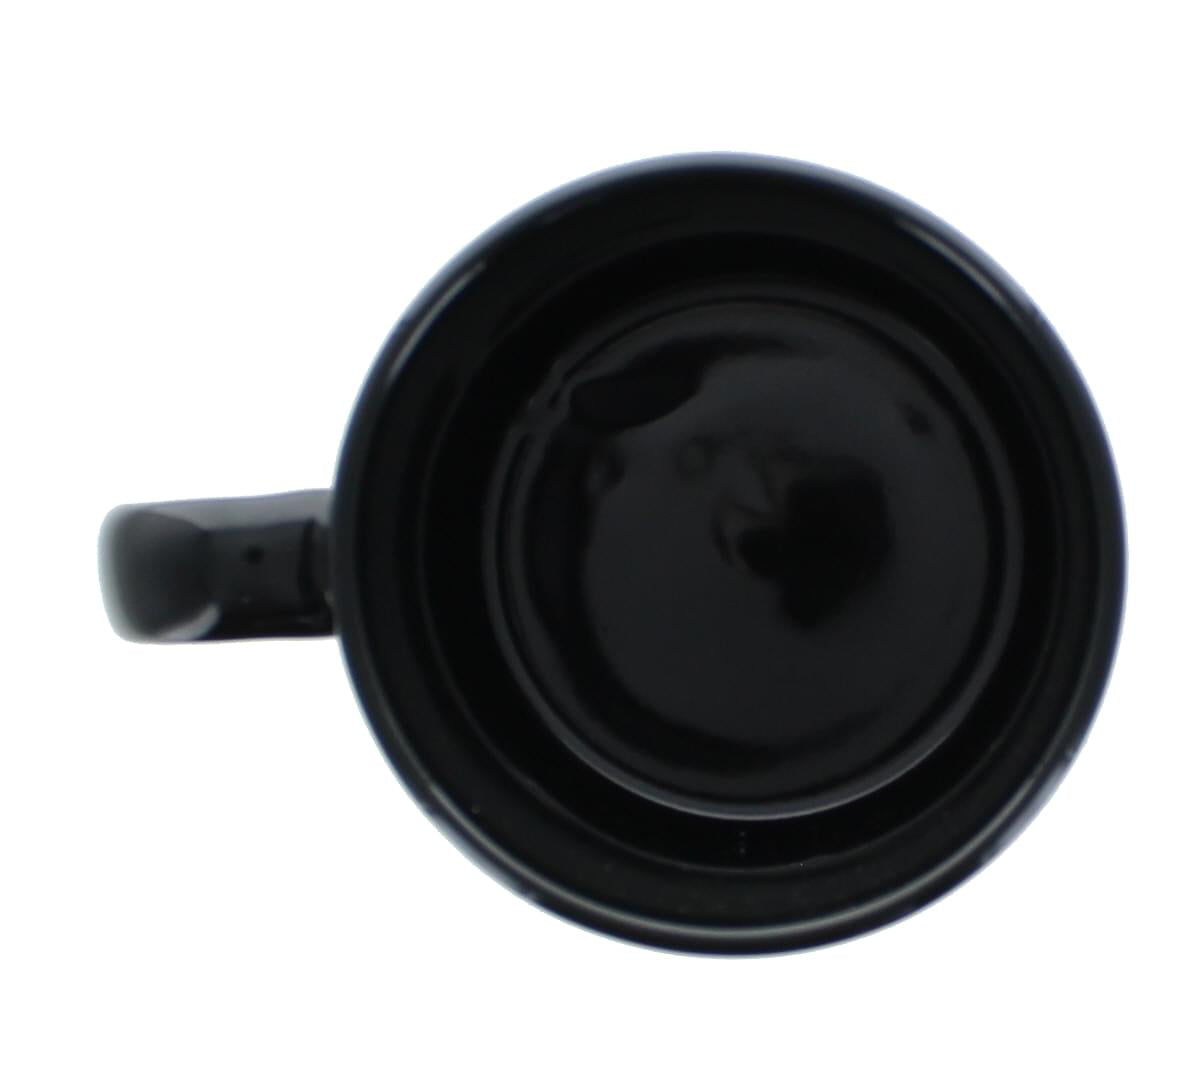 PlayStation Logo and Icons Black Ceramic Coffee Mug